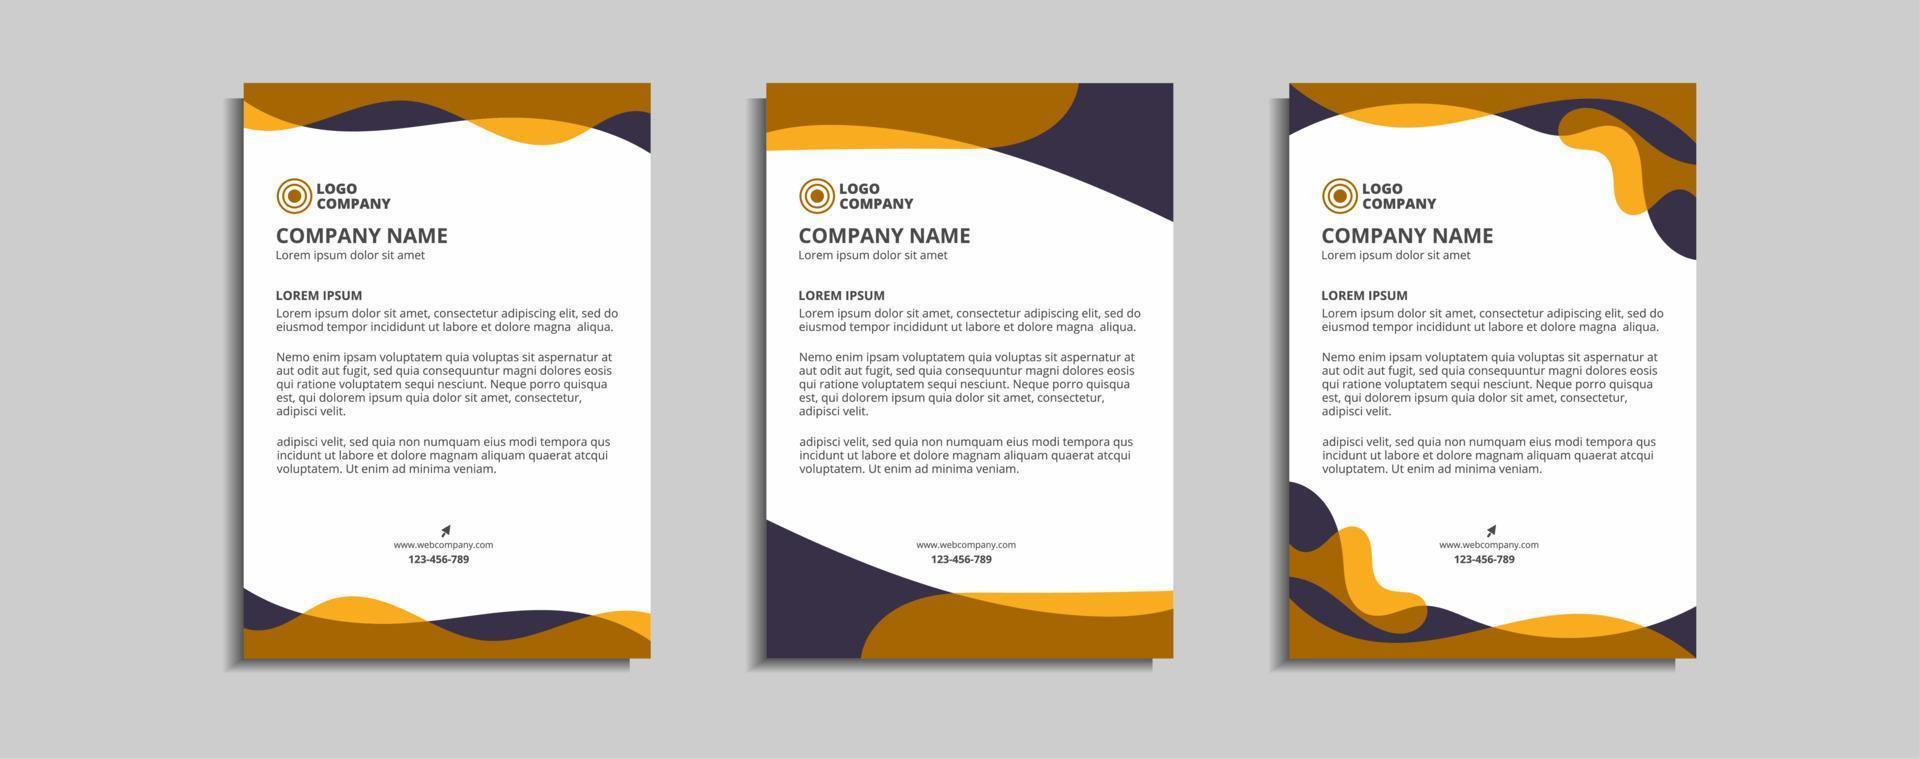 modern corporate letterhead template design vector